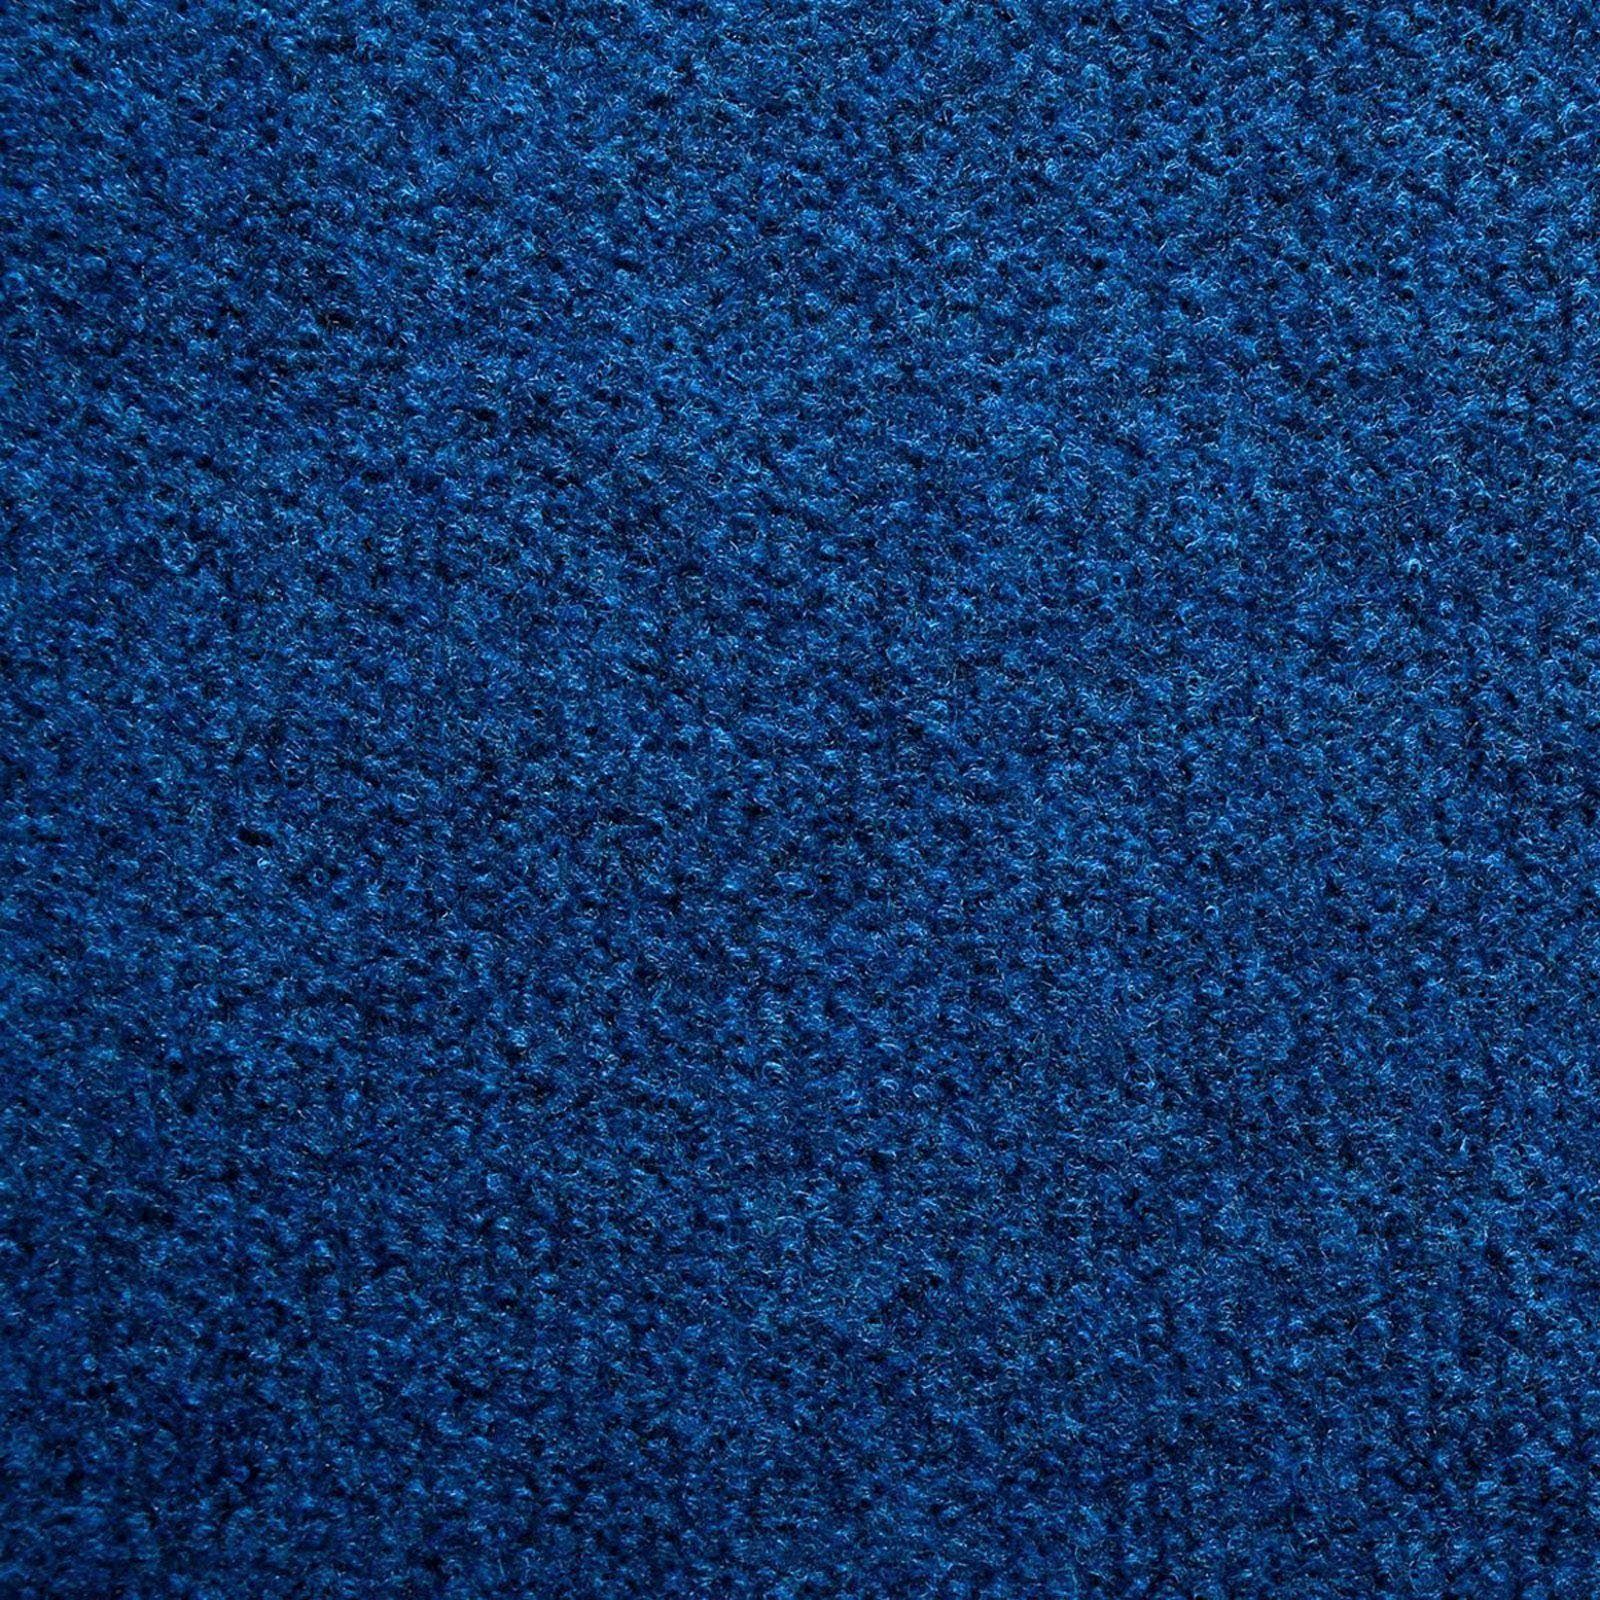 Dunkelblau 3 Höhe: mm, verschiedene Größen, rechteckig, my Malta, Teppichboden Nadelfilz Farben home, & Polypropylen,